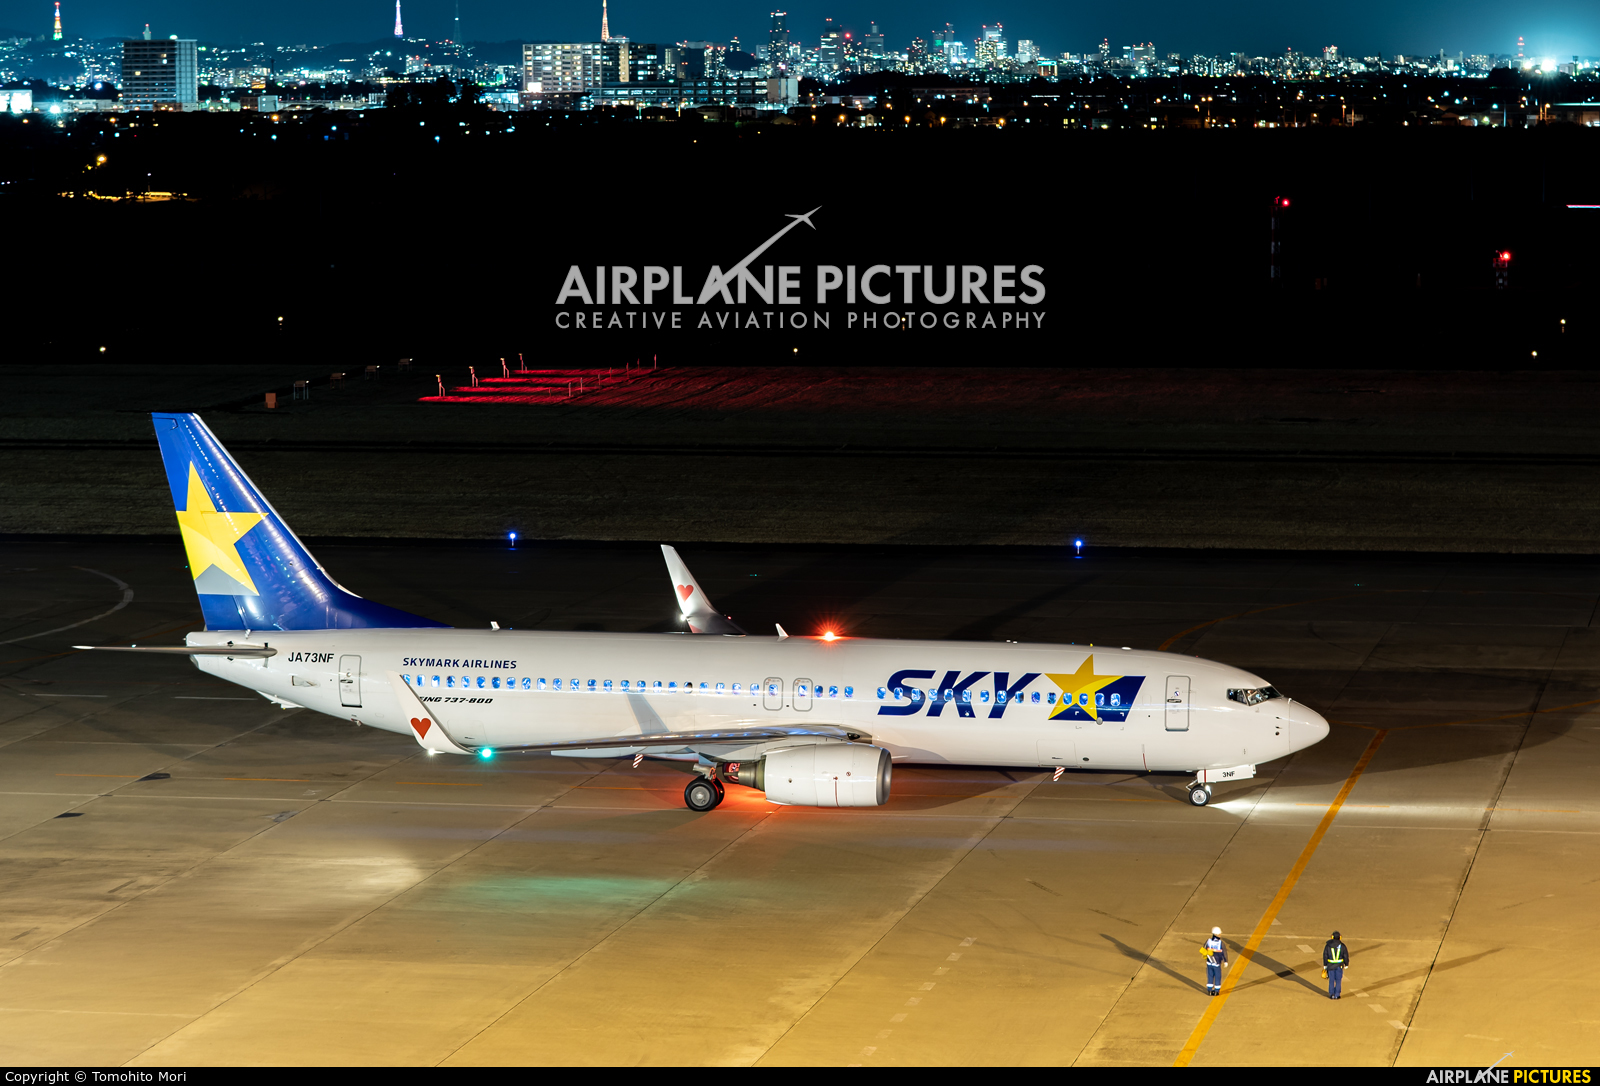 Skymark Airlines JA73NF aircraft at Sendai